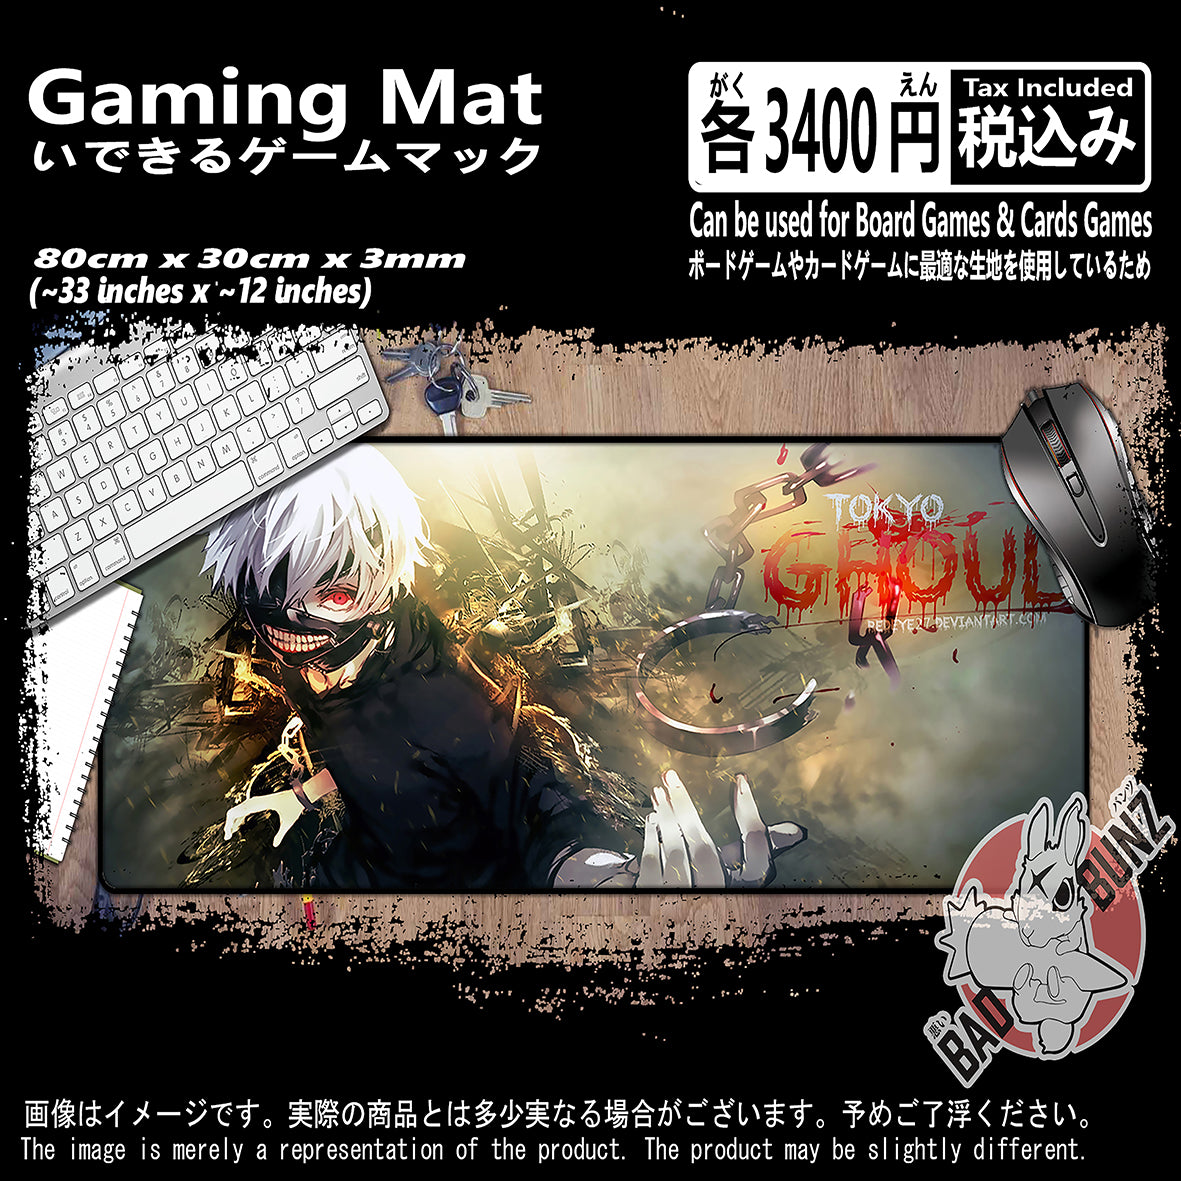 (AN-TG-02) Tokyo Ghoul Anime 800mm x 300mm Gaming Play Mat